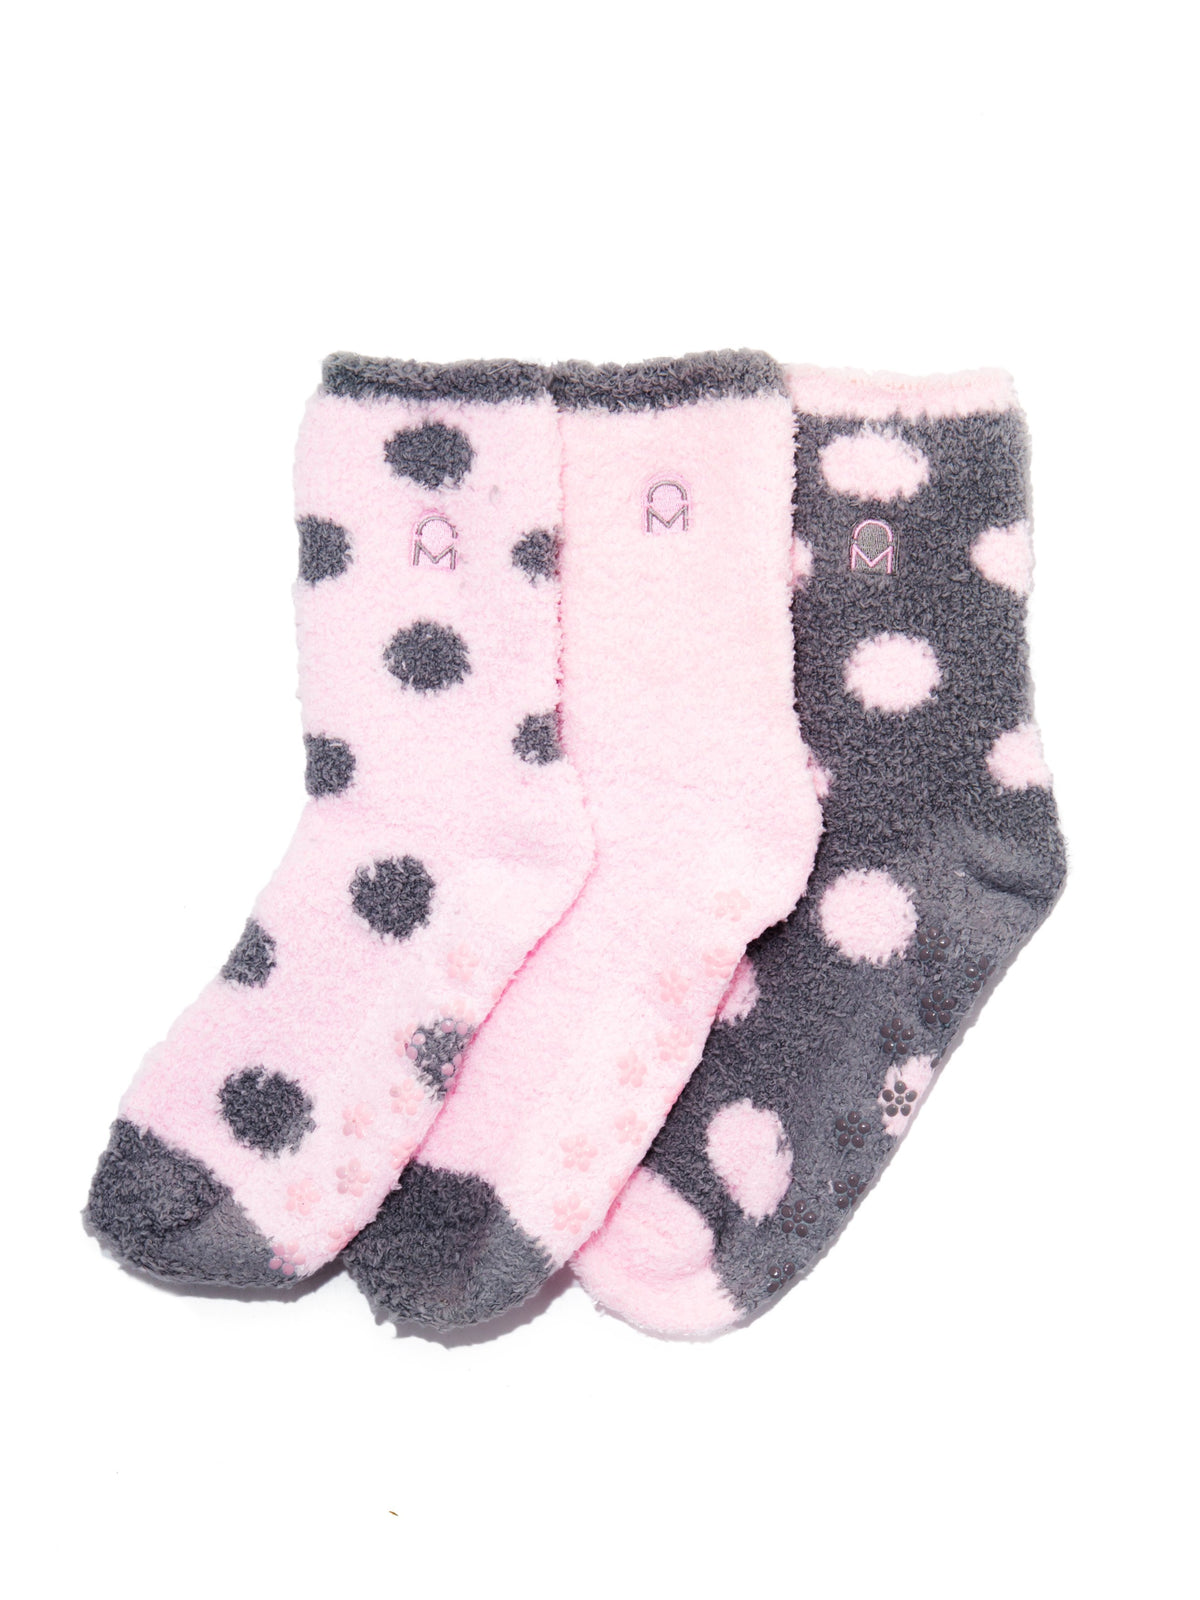 Women's (3 Pairs) Soft Anti-Skid Fuzzy Winter Crew Socks - Set D4